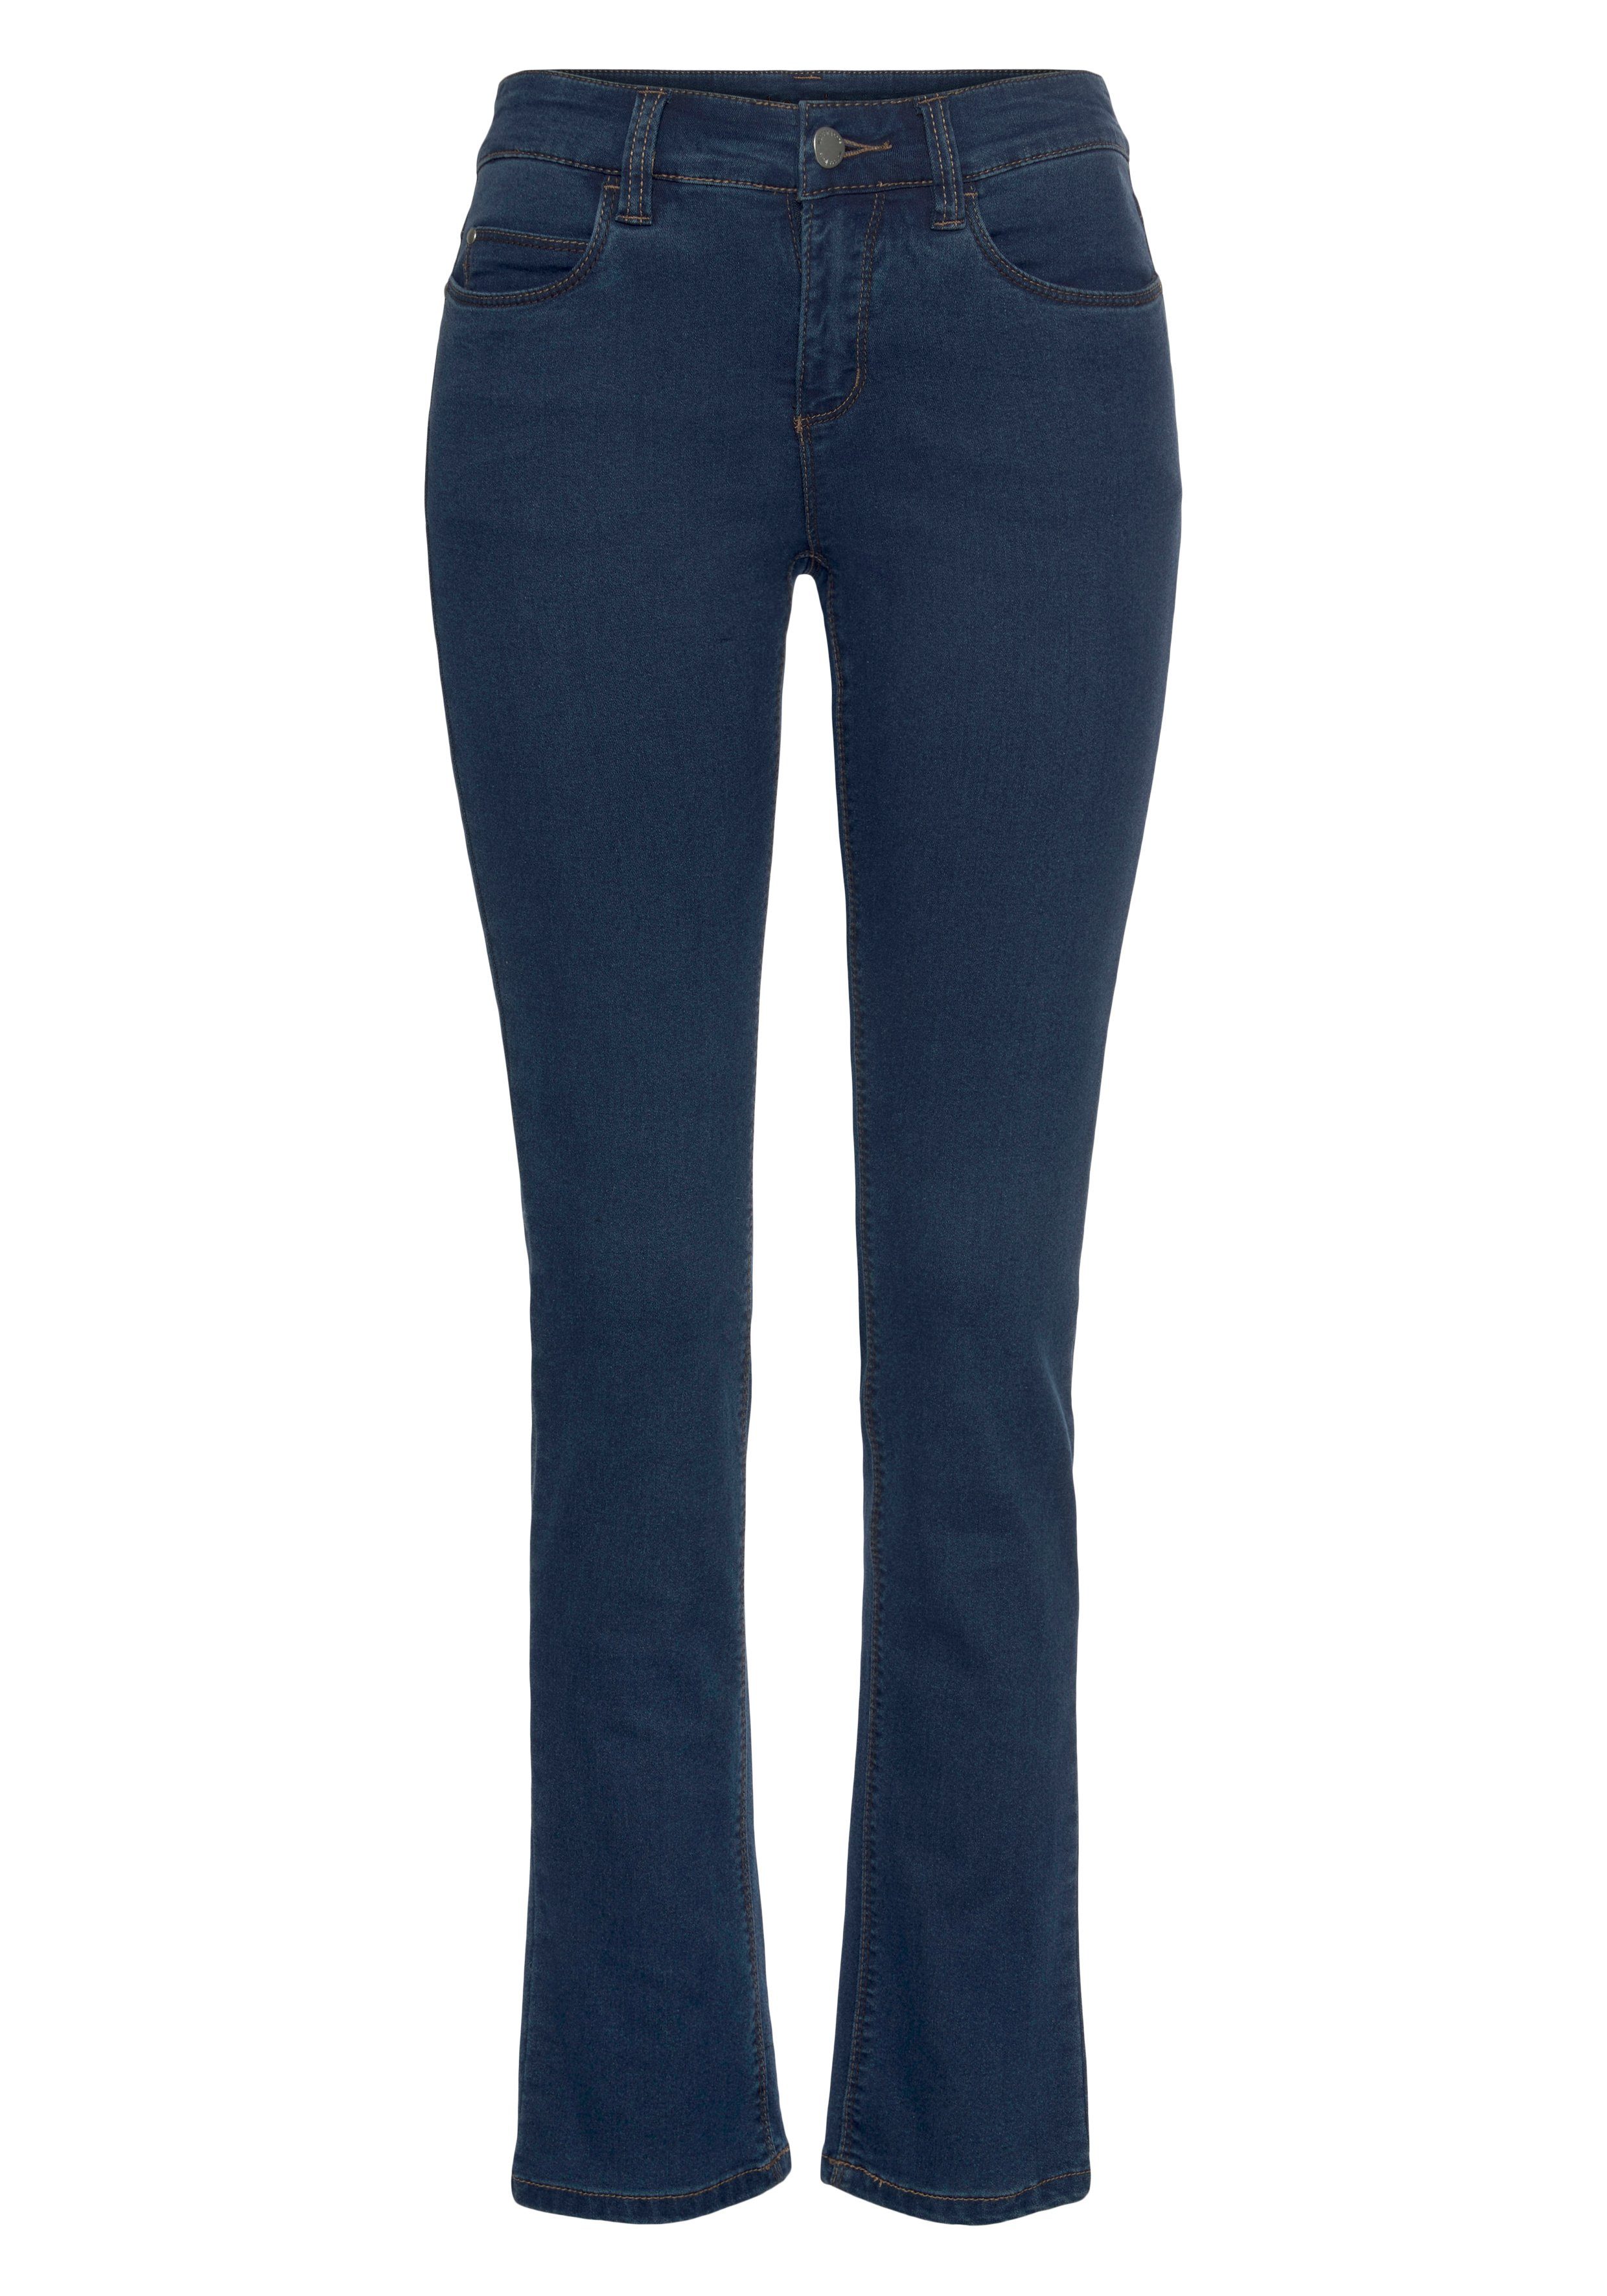 wonderjeans Slim-fit-Jeans Classic-Slim stone gerader blue washed Schnitt Klassischer